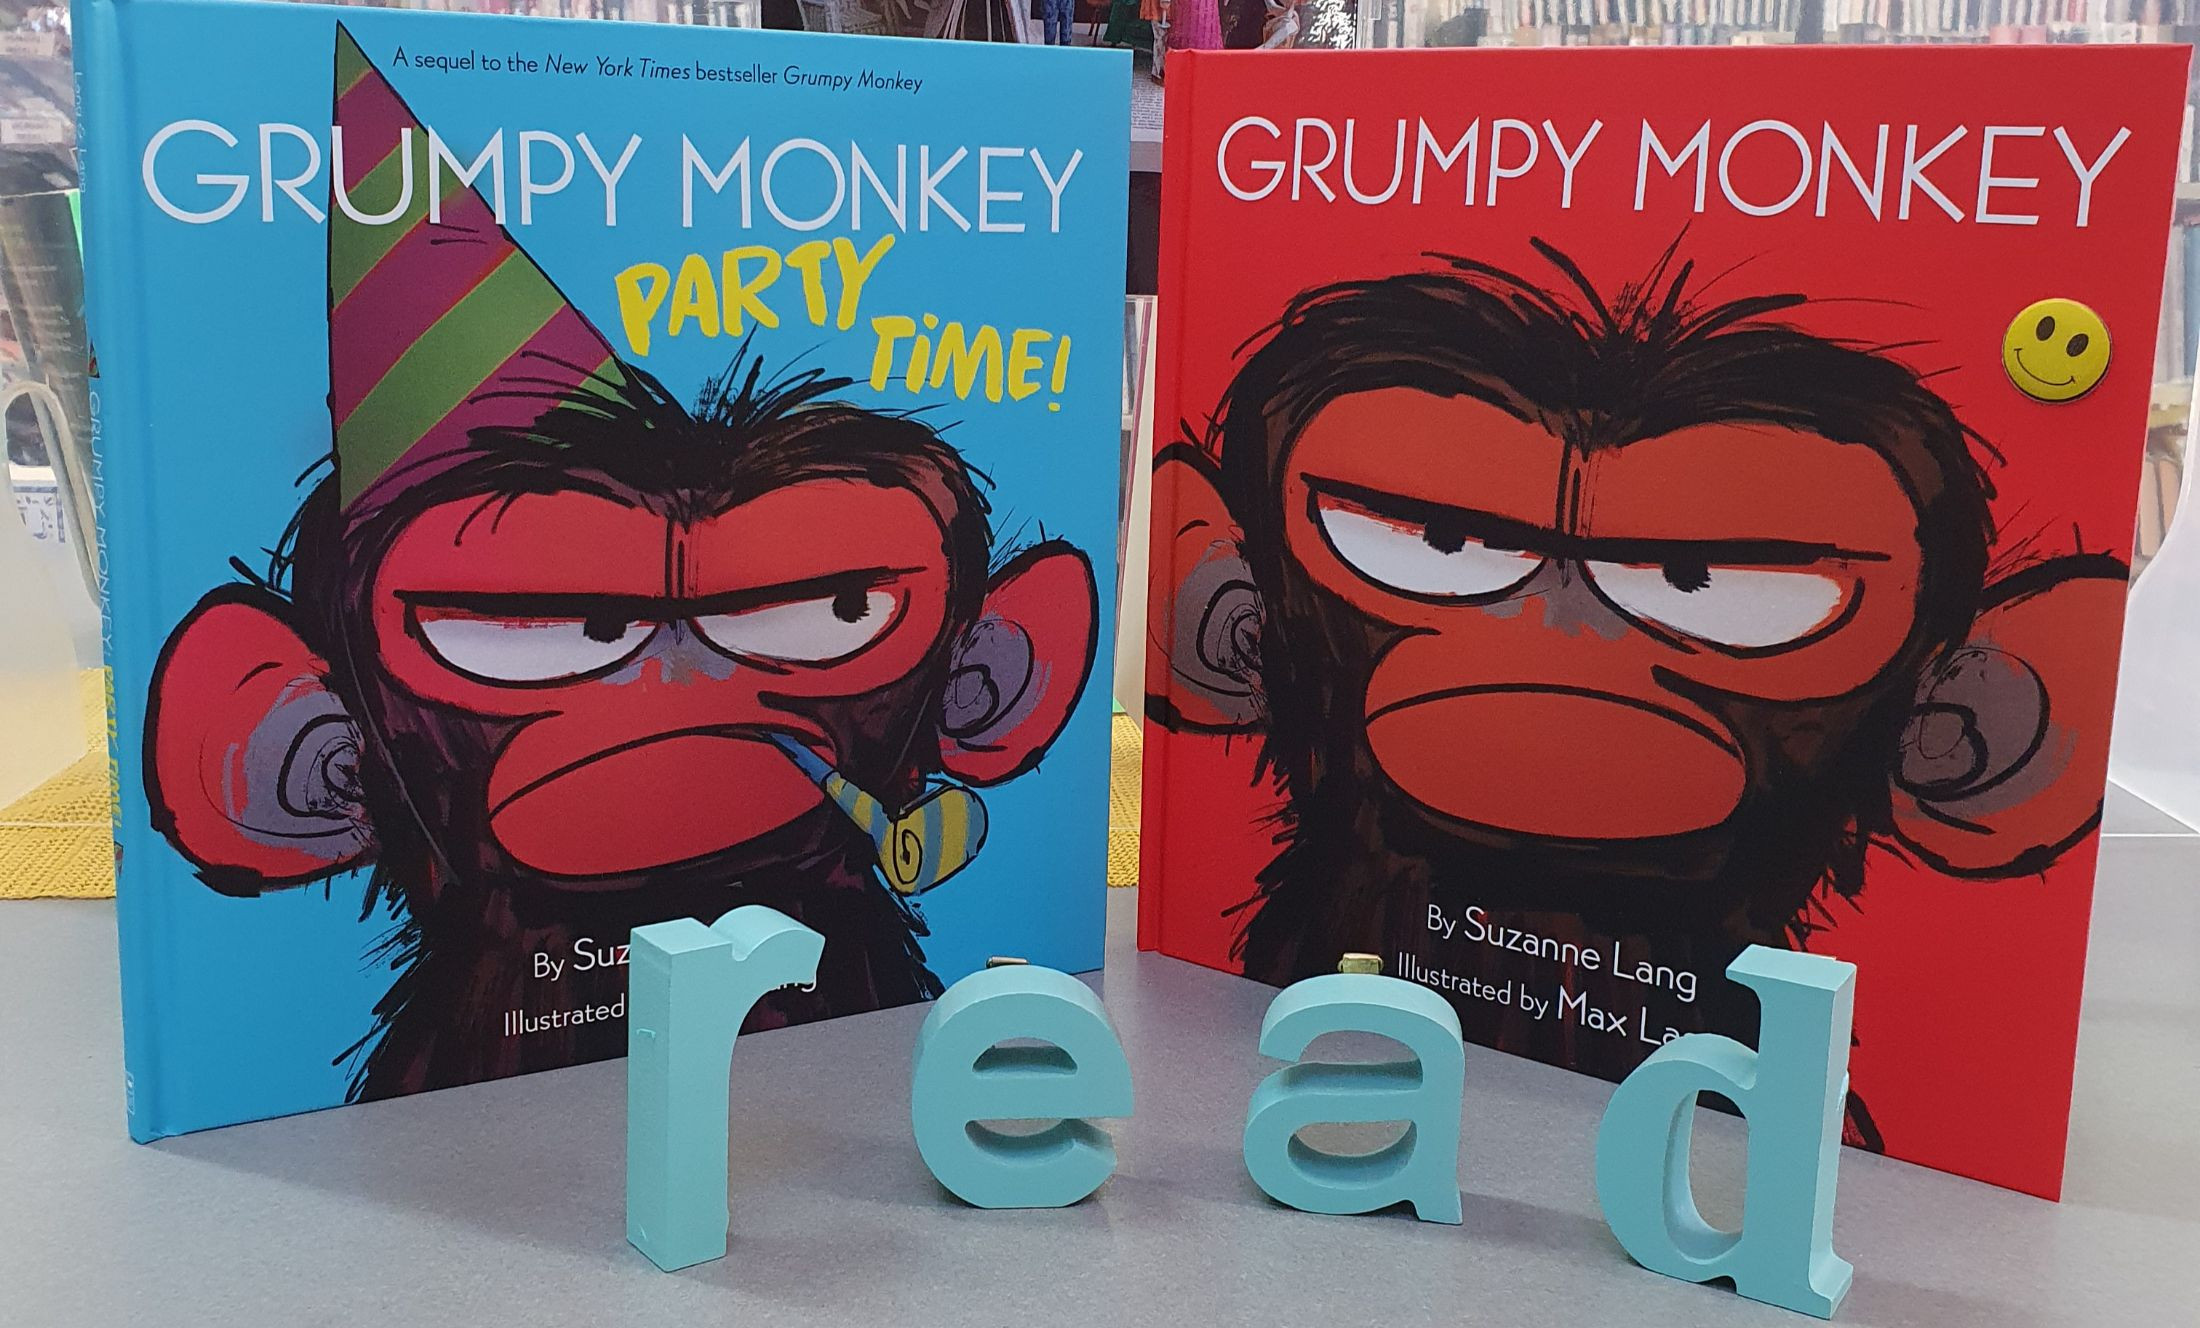 Are You a Grumpy Monkey?